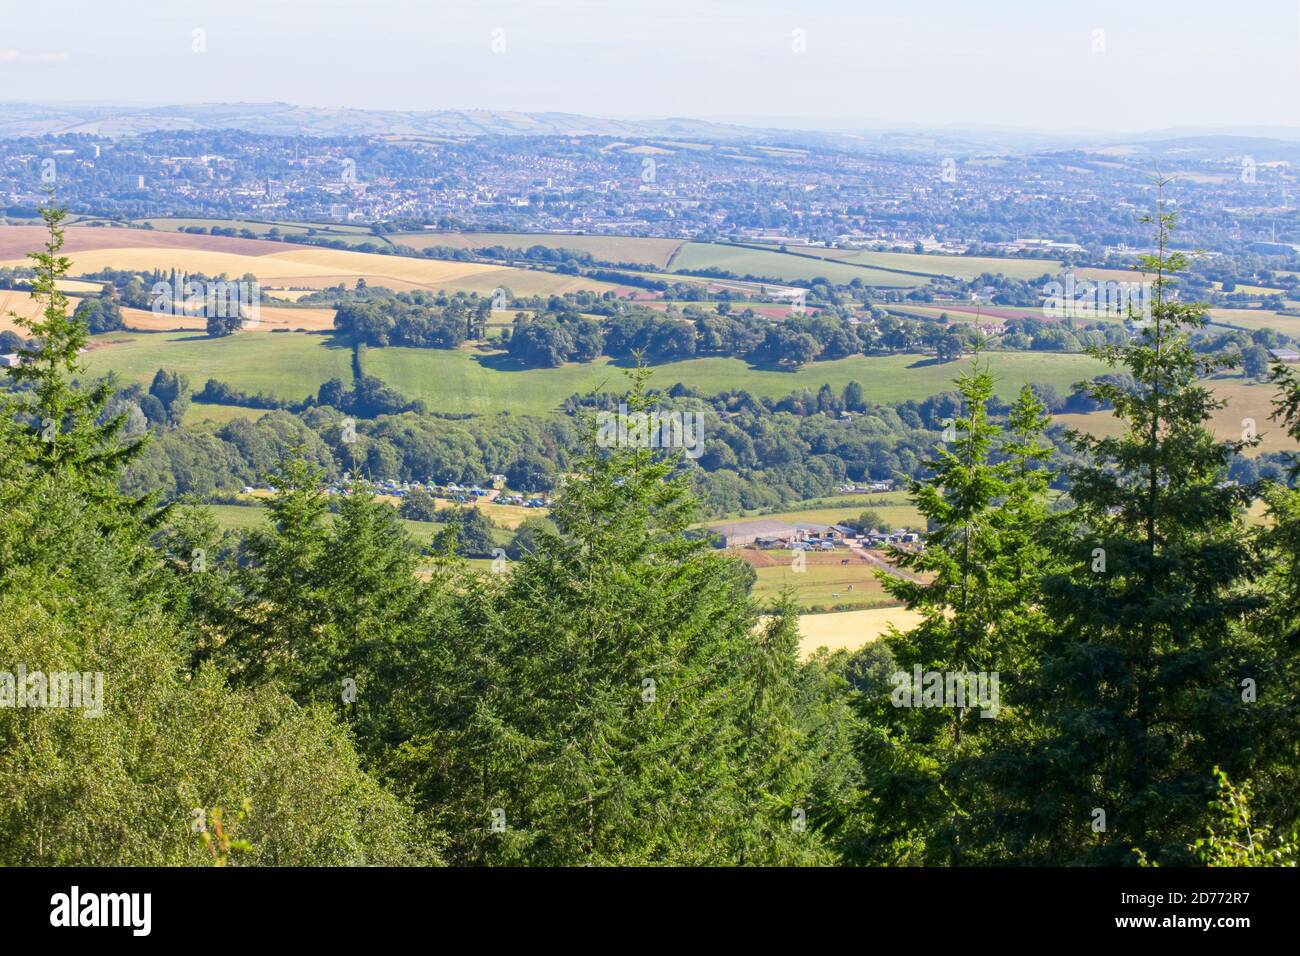 A view across Devonish farmland towards Exeter from Haldon Forest, Devon, England, UK. Stock Photo